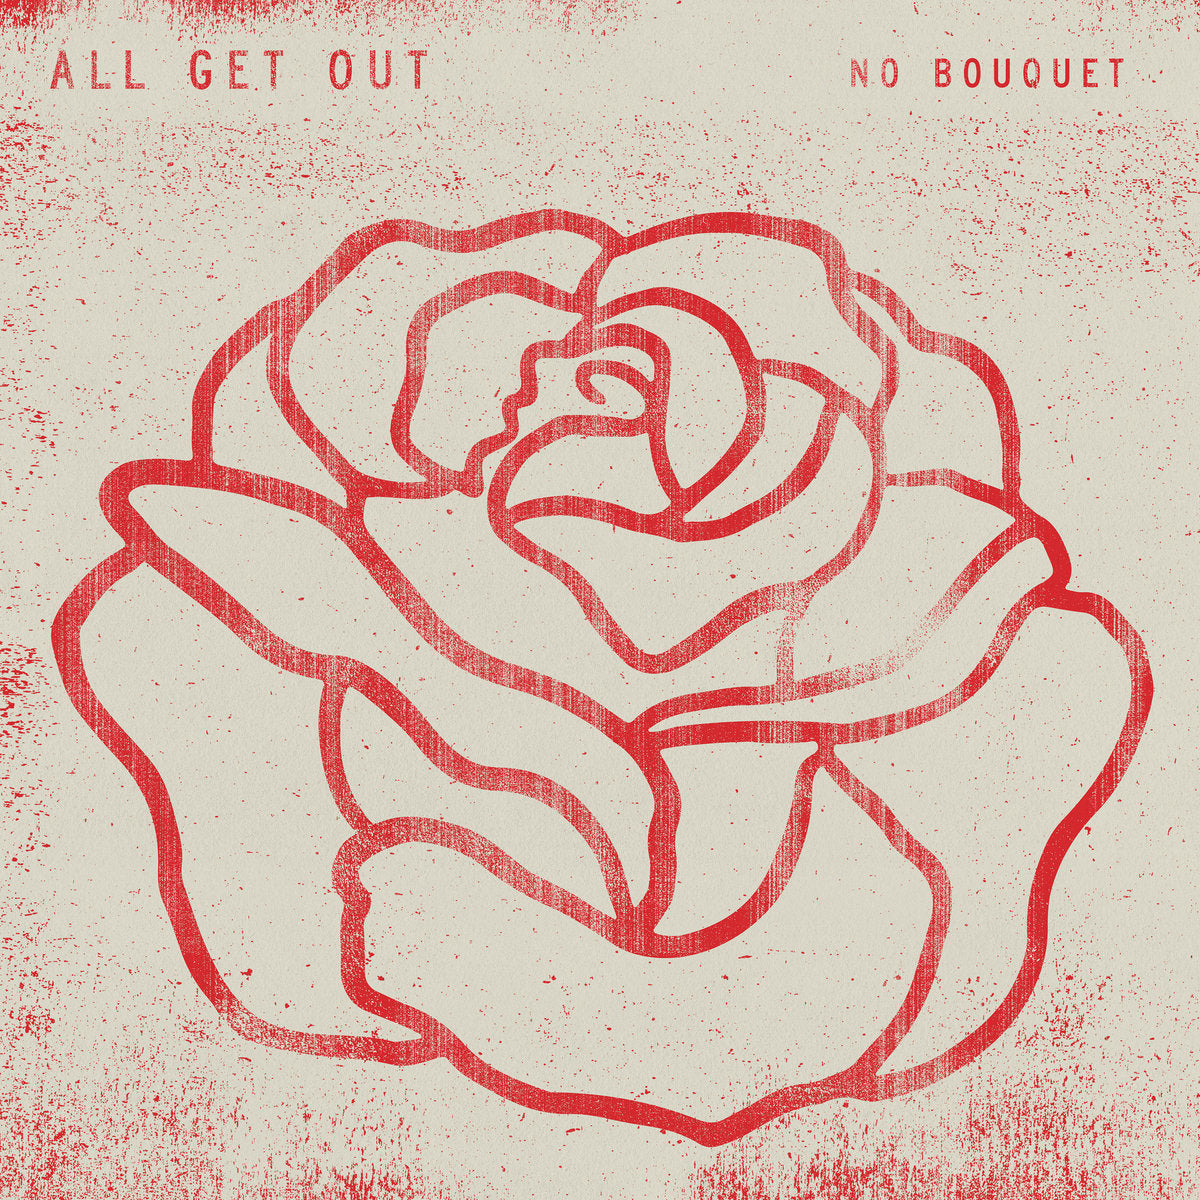 All Get Out "No Bouquet" 12" Vinyl